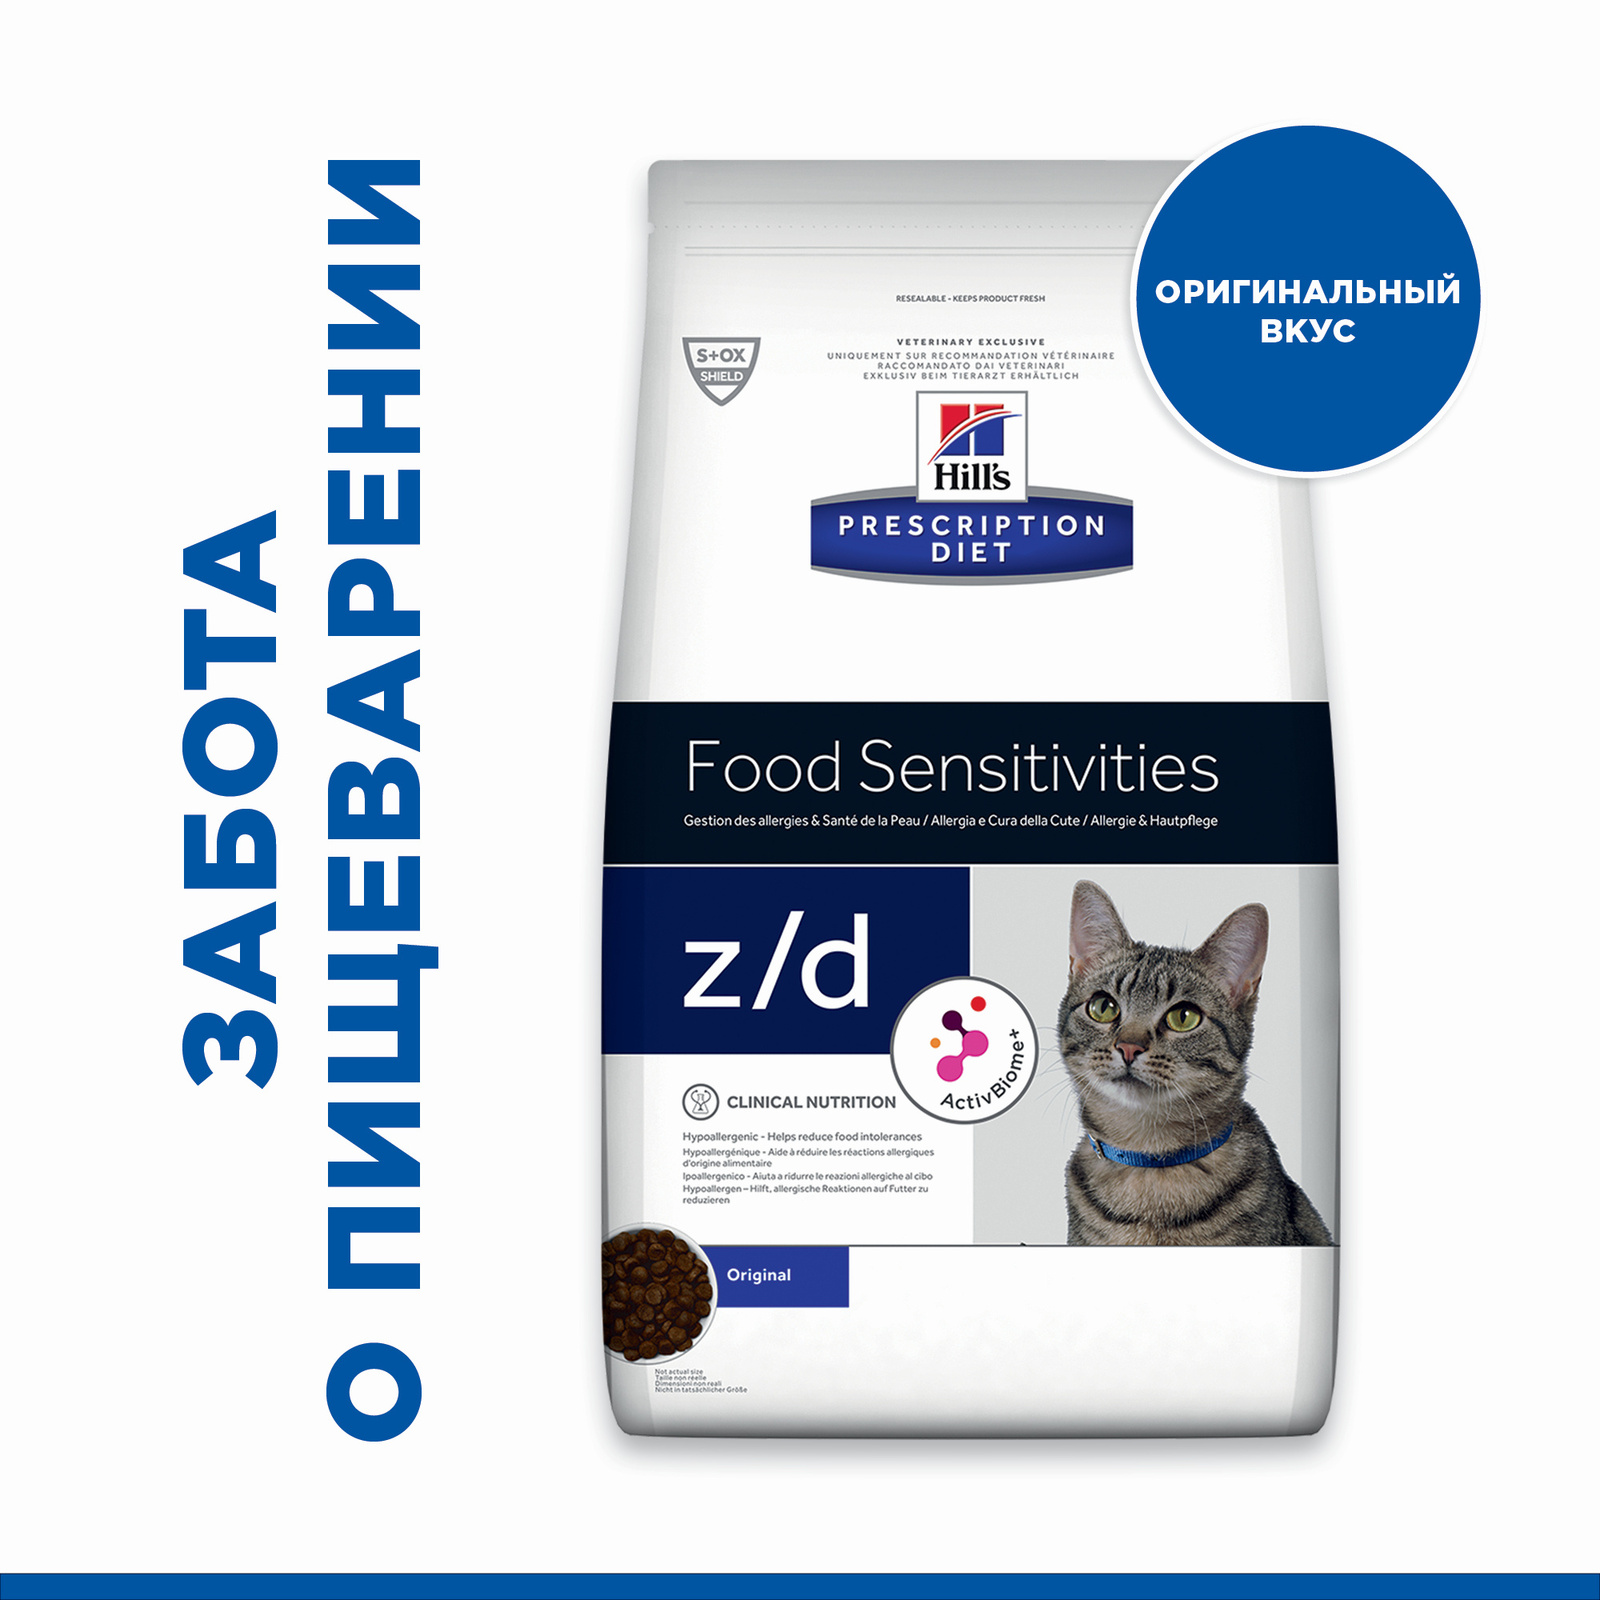 z/d Food Sensitivities сухой диетический, для кошек при пищевой аллергии, гипоаллергенный (2 кг) Hill's Prescription Diet z/d Food Sensitivities сухой диетический, для кошек при пищевой аллергии, гипоаллергенный (2 кг) - фото 2